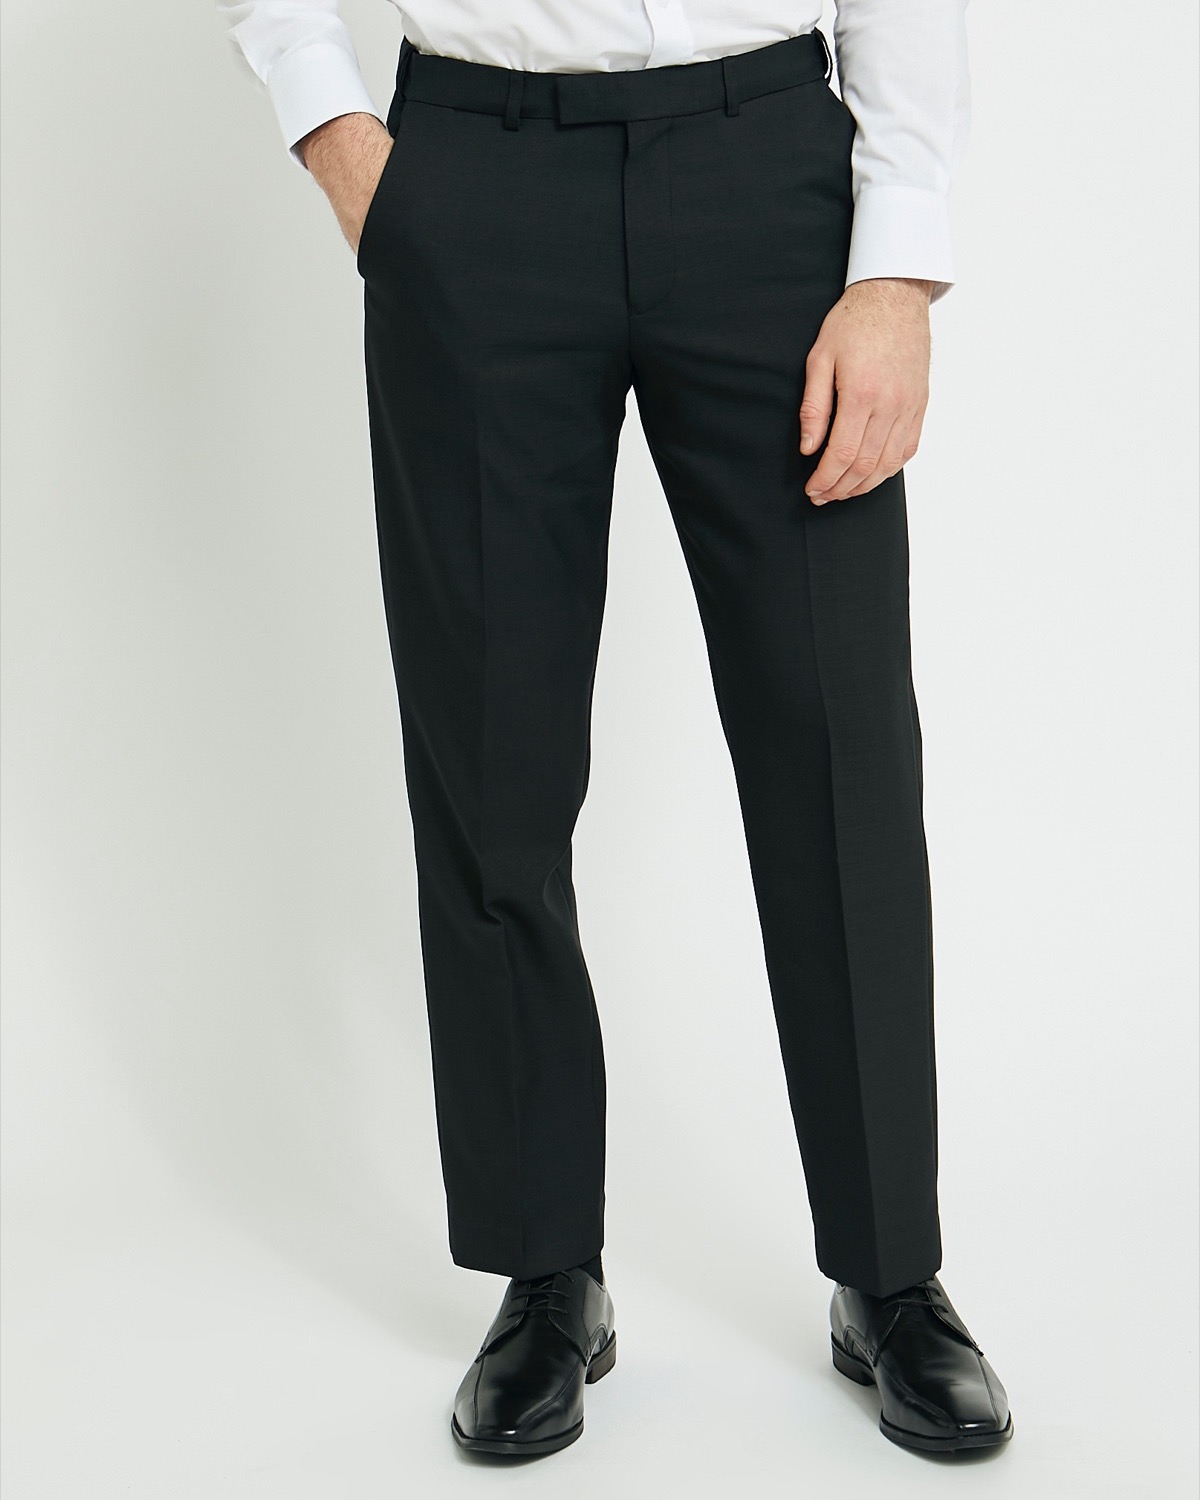 Active Waist Trousers New Ex Marks amp Spencer Mens MampS Smart Formal  Work Pants  eBay